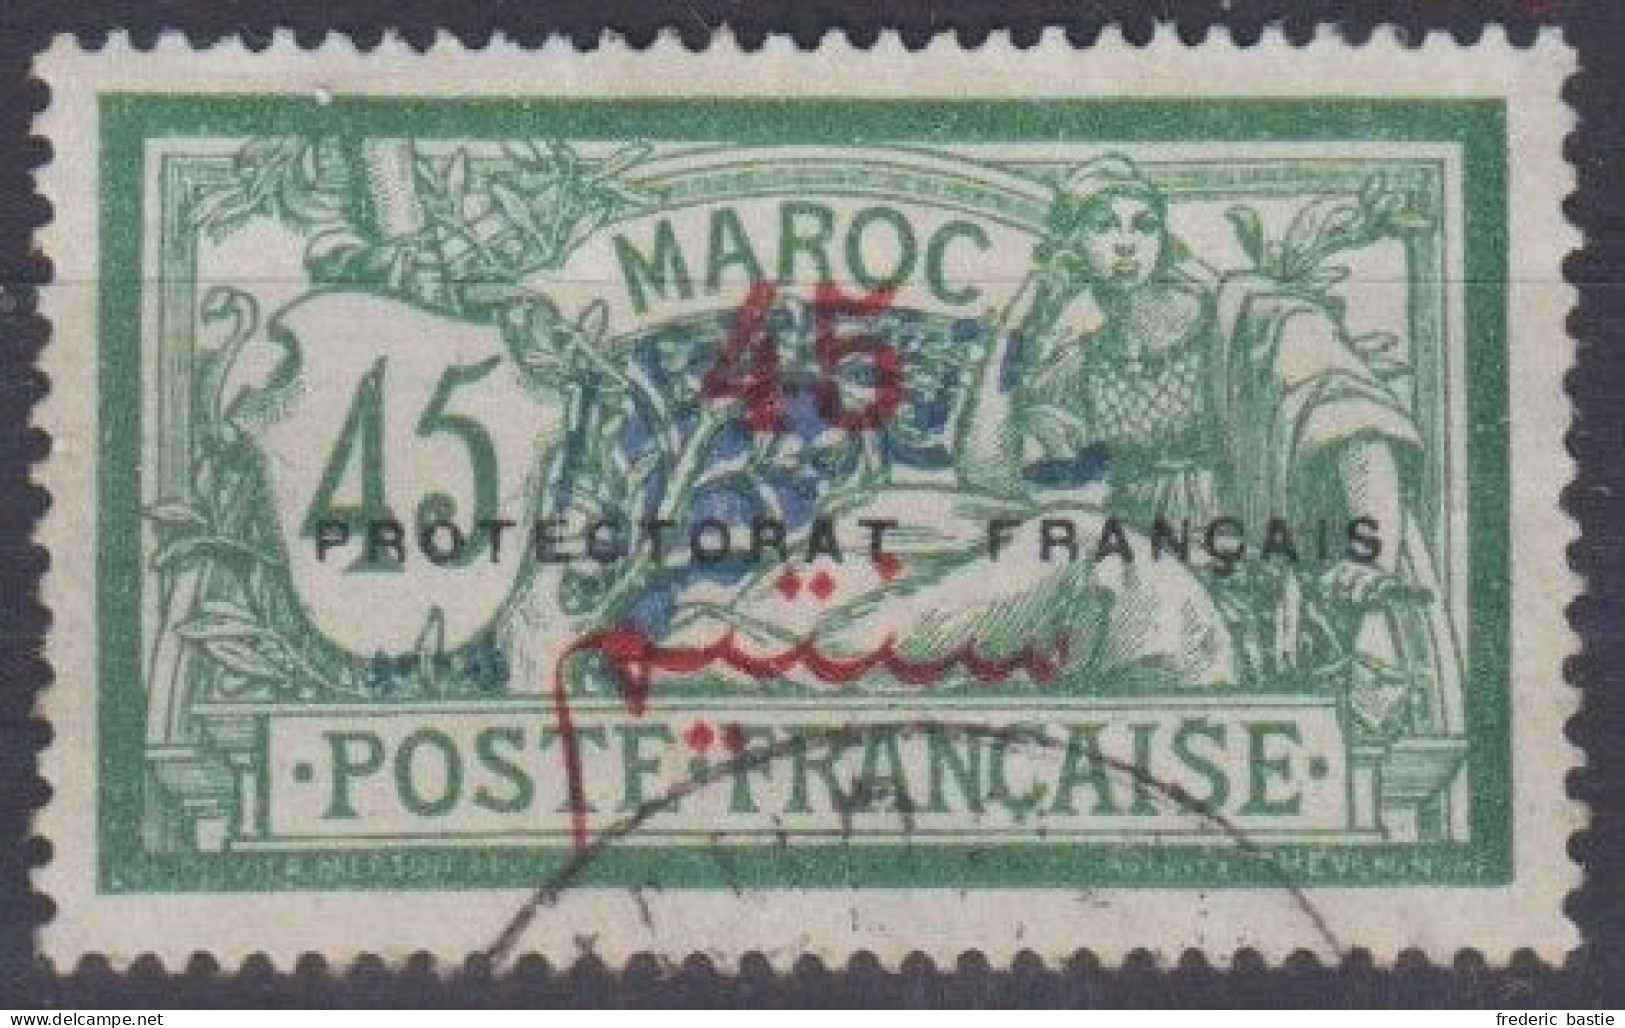 MAROC  - N°  49 Oblitéré  - Cote : 50 € - Used Stamps